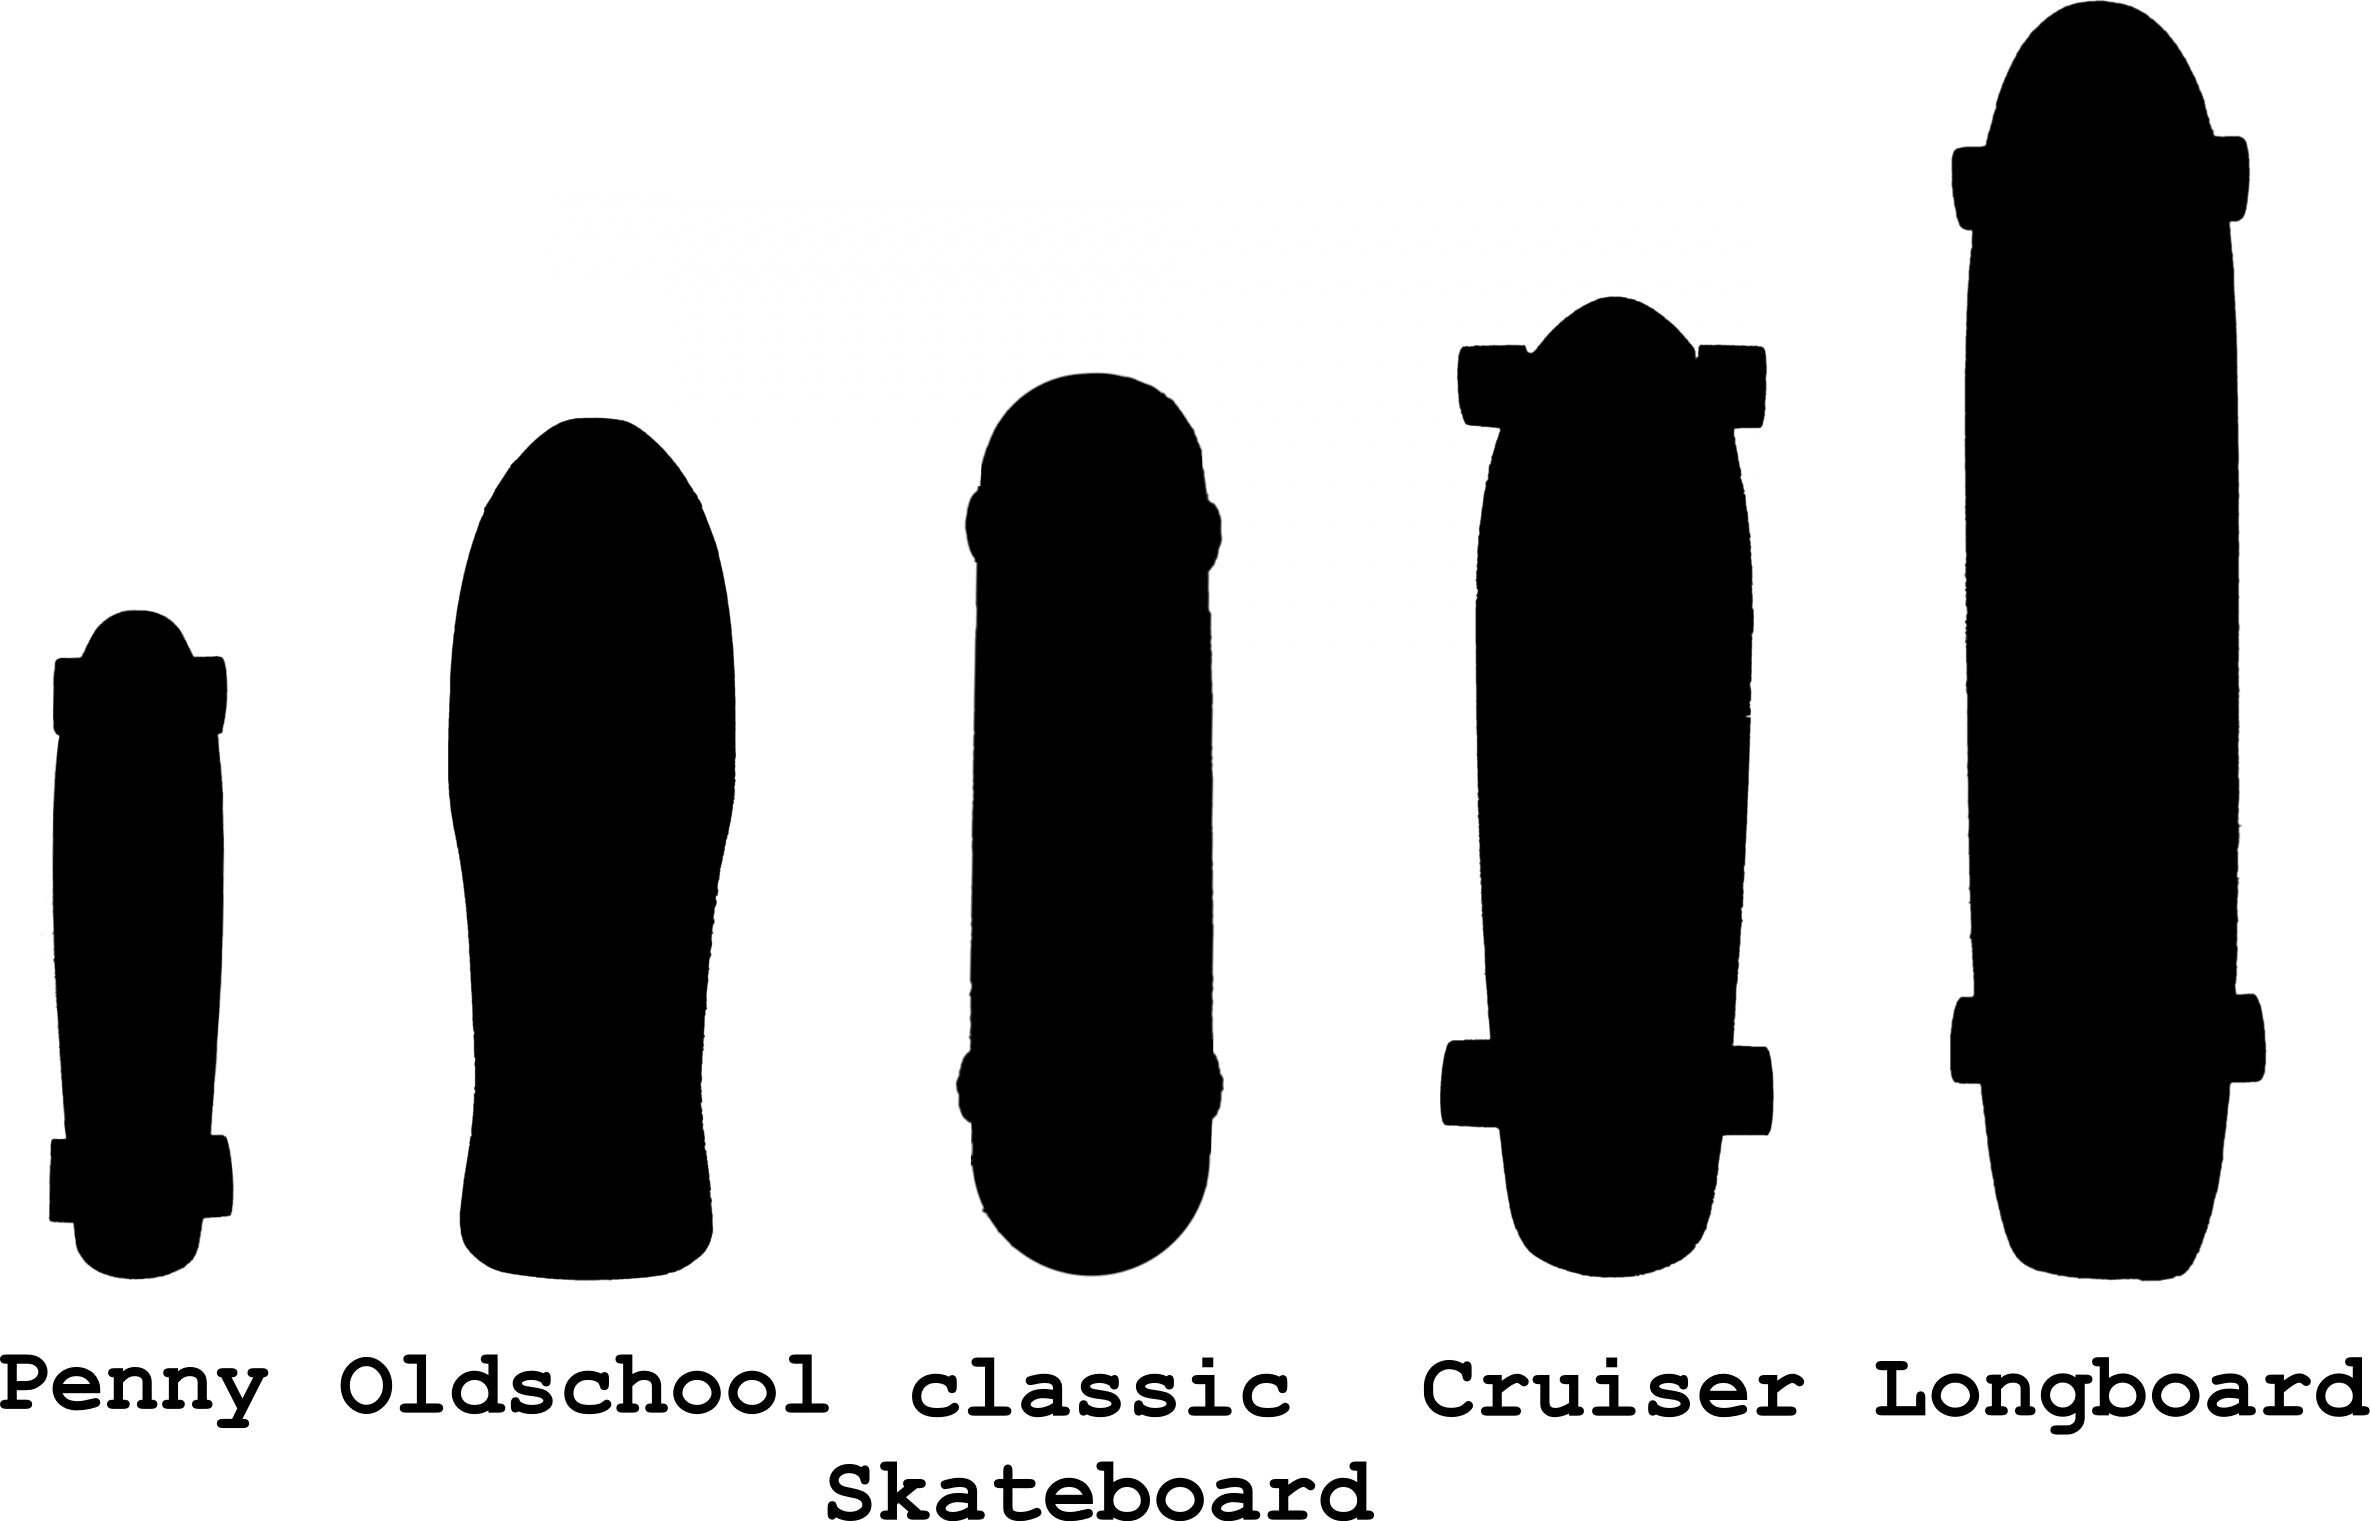 Penny, Oldschool Skateboard, Classic Skateboard, Cruiser y Longboard en comparación